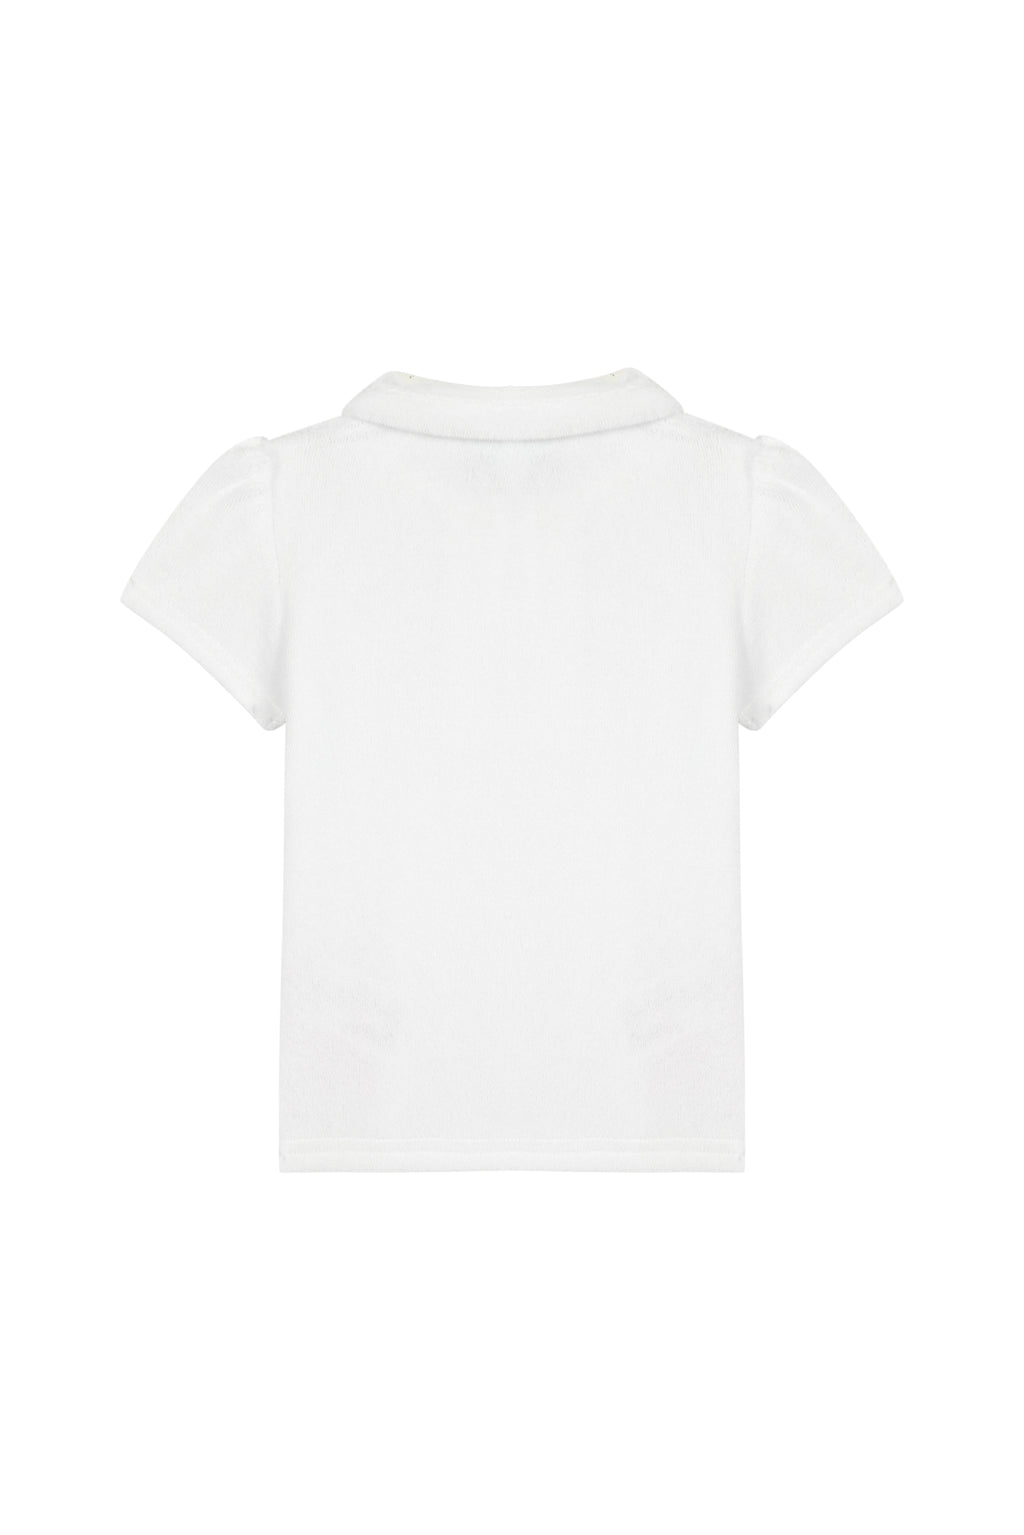 Dress - White sponge polo shirt